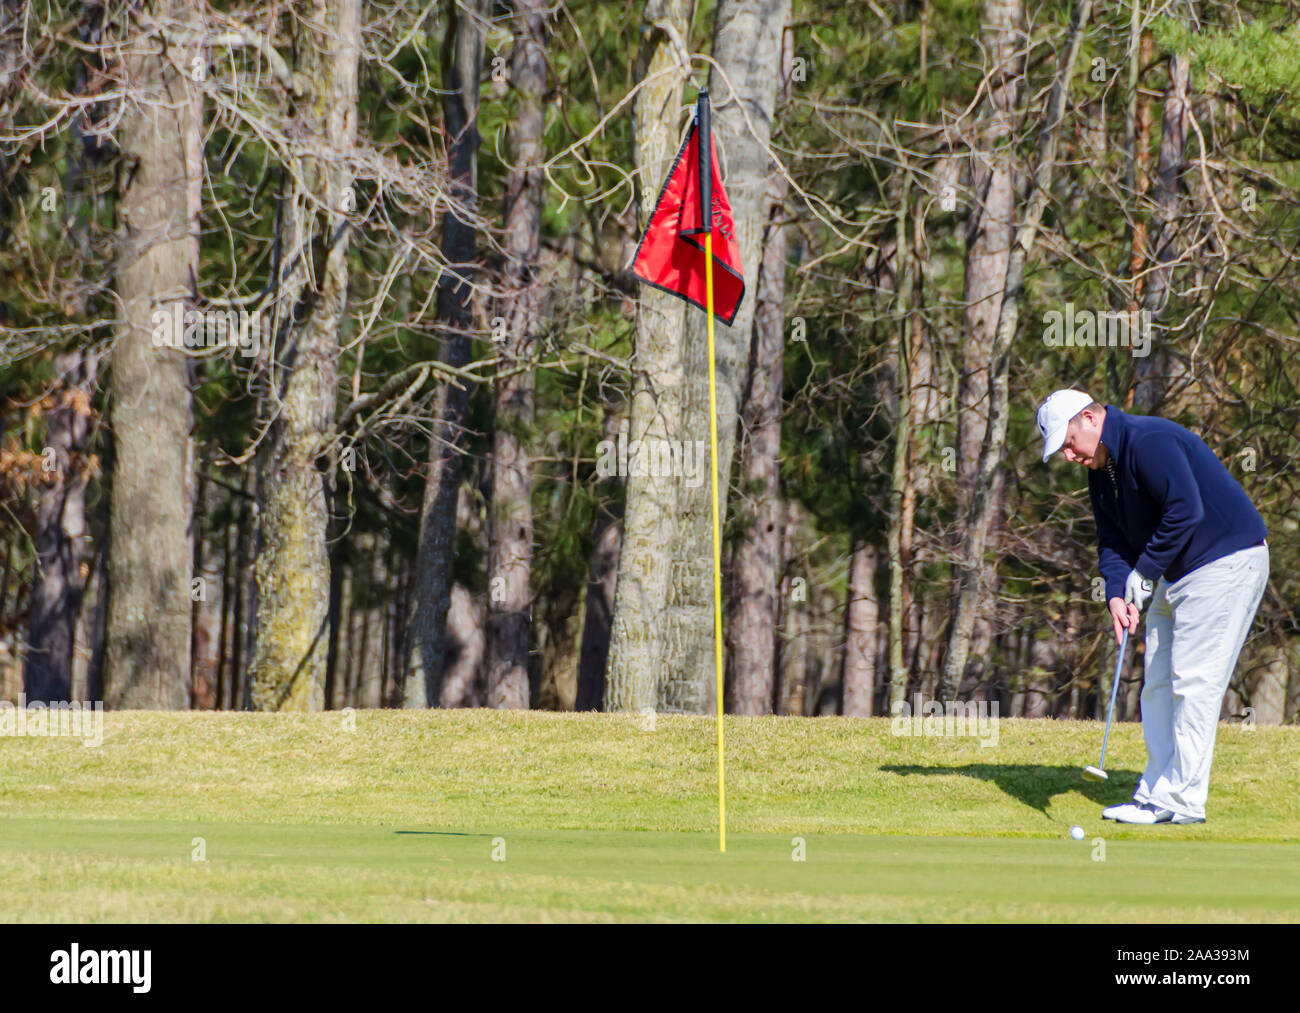 A golfer putting the golf ball. Stock Photo